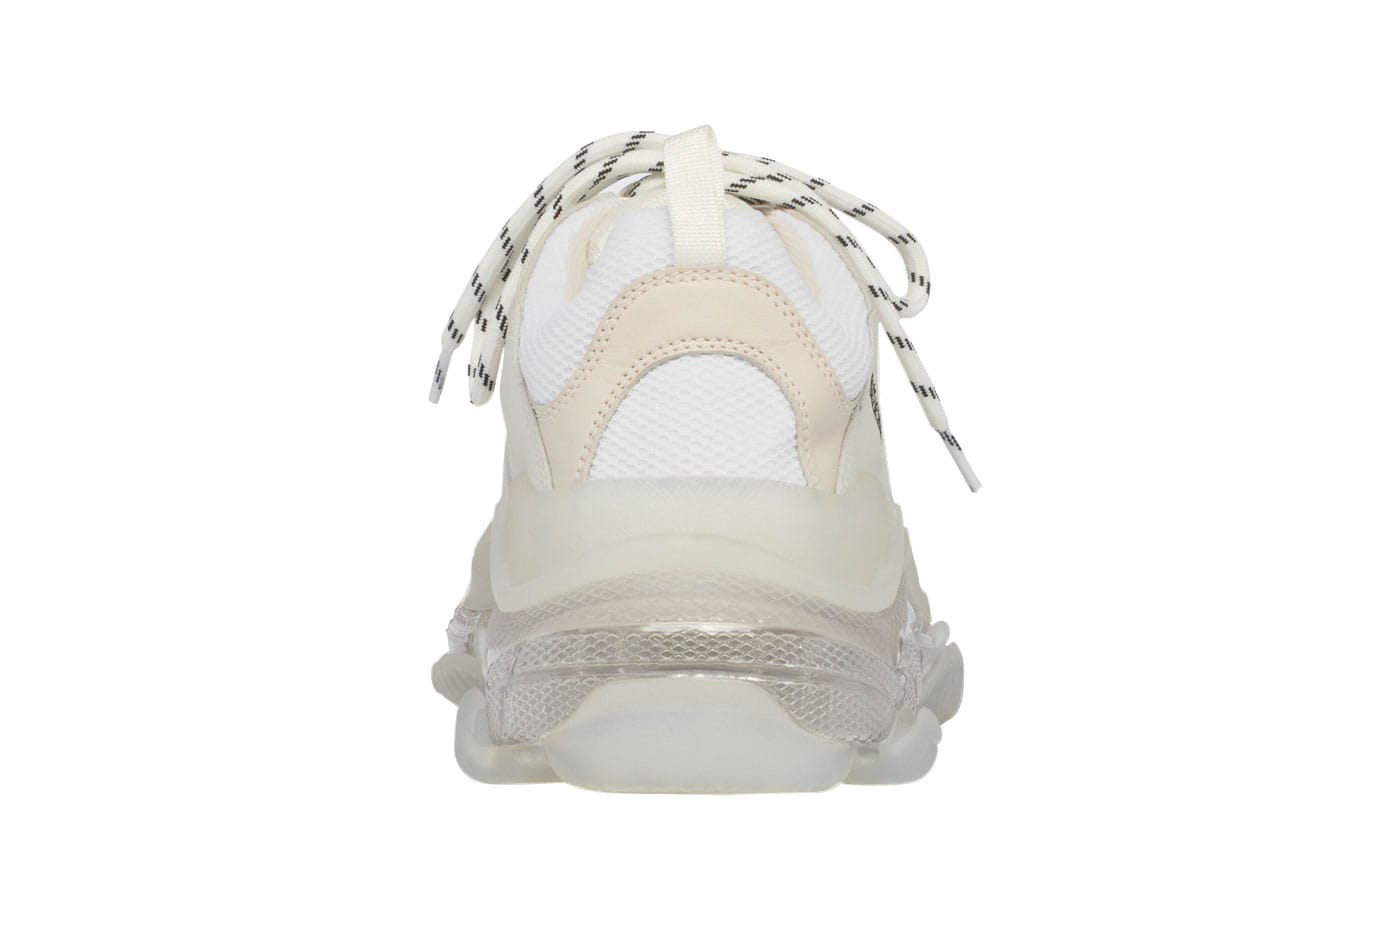 Balenciaga triple s sneaker rainbow air bubbles outsole white